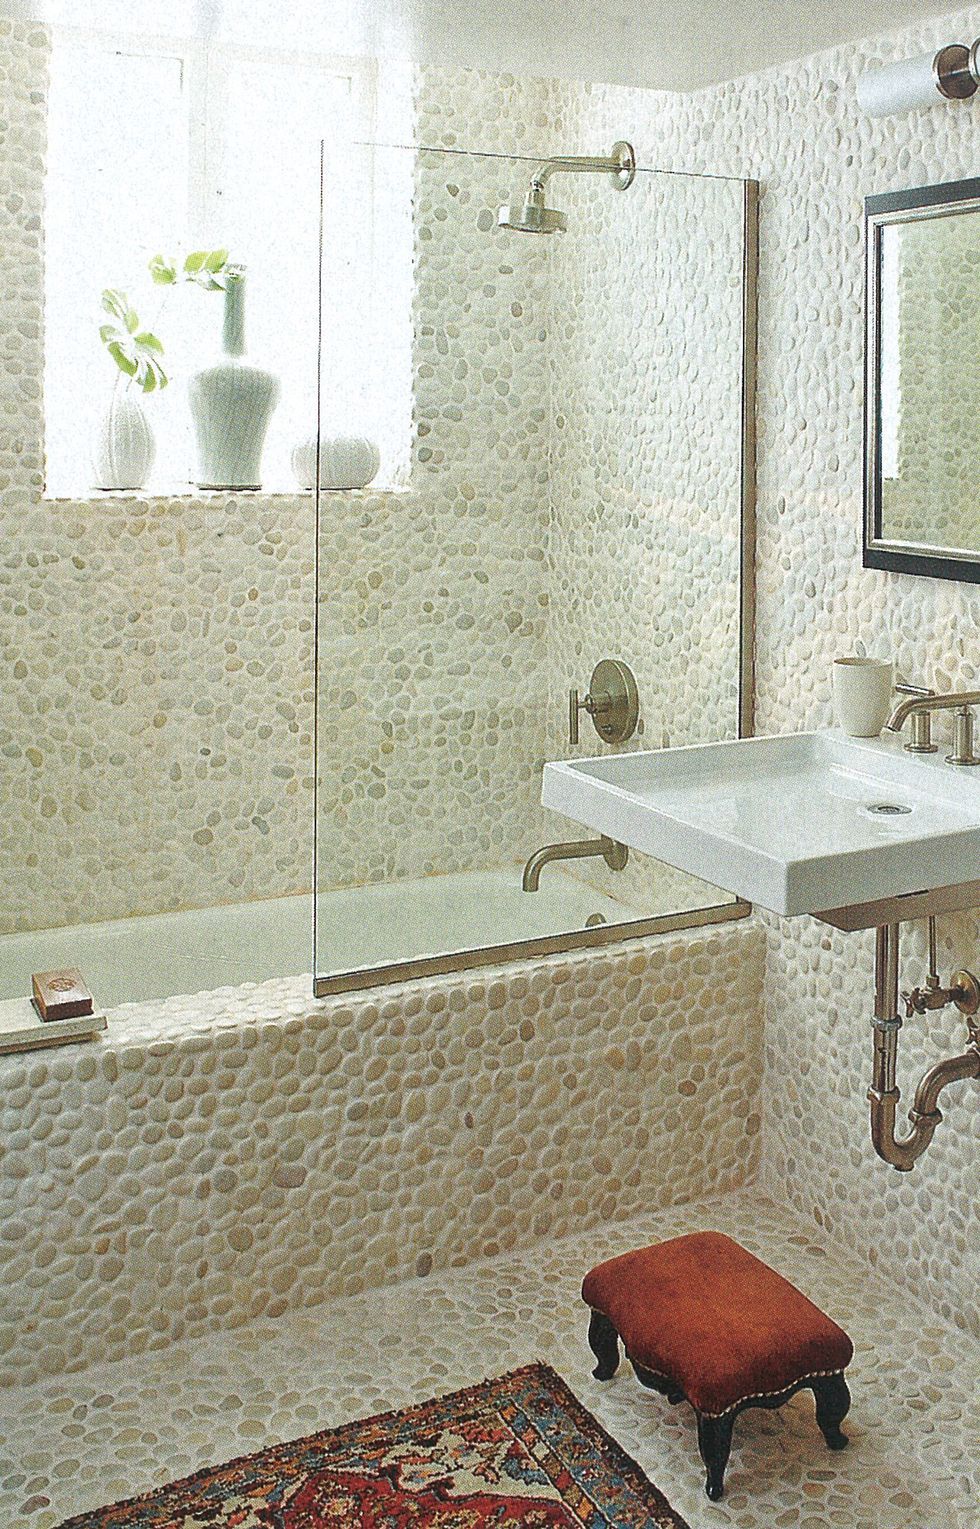 Small Bathrooms Design Ideas 2020 How To Decorate Small Bathroom,Coastal Design Living Room